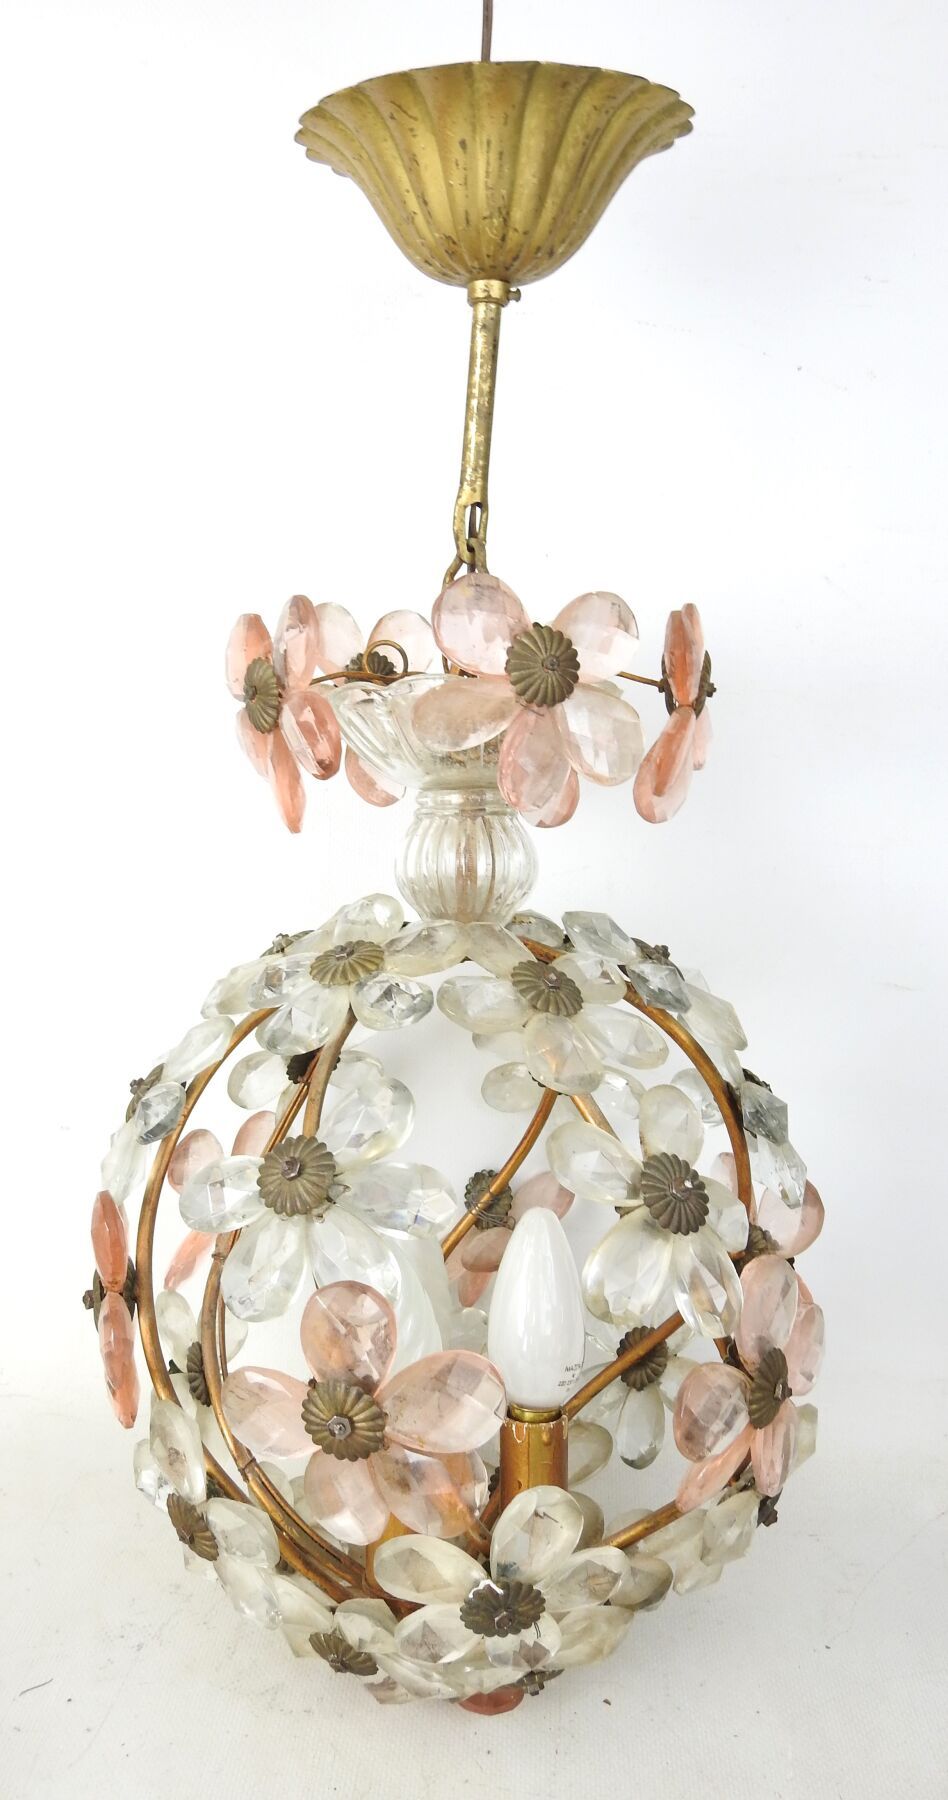 Null 圆形吊灯，饰有花朵图案，部分图案由粉色有色玻璃制成。高 55 厘米，直径 25 厘米。一朵花的事故。